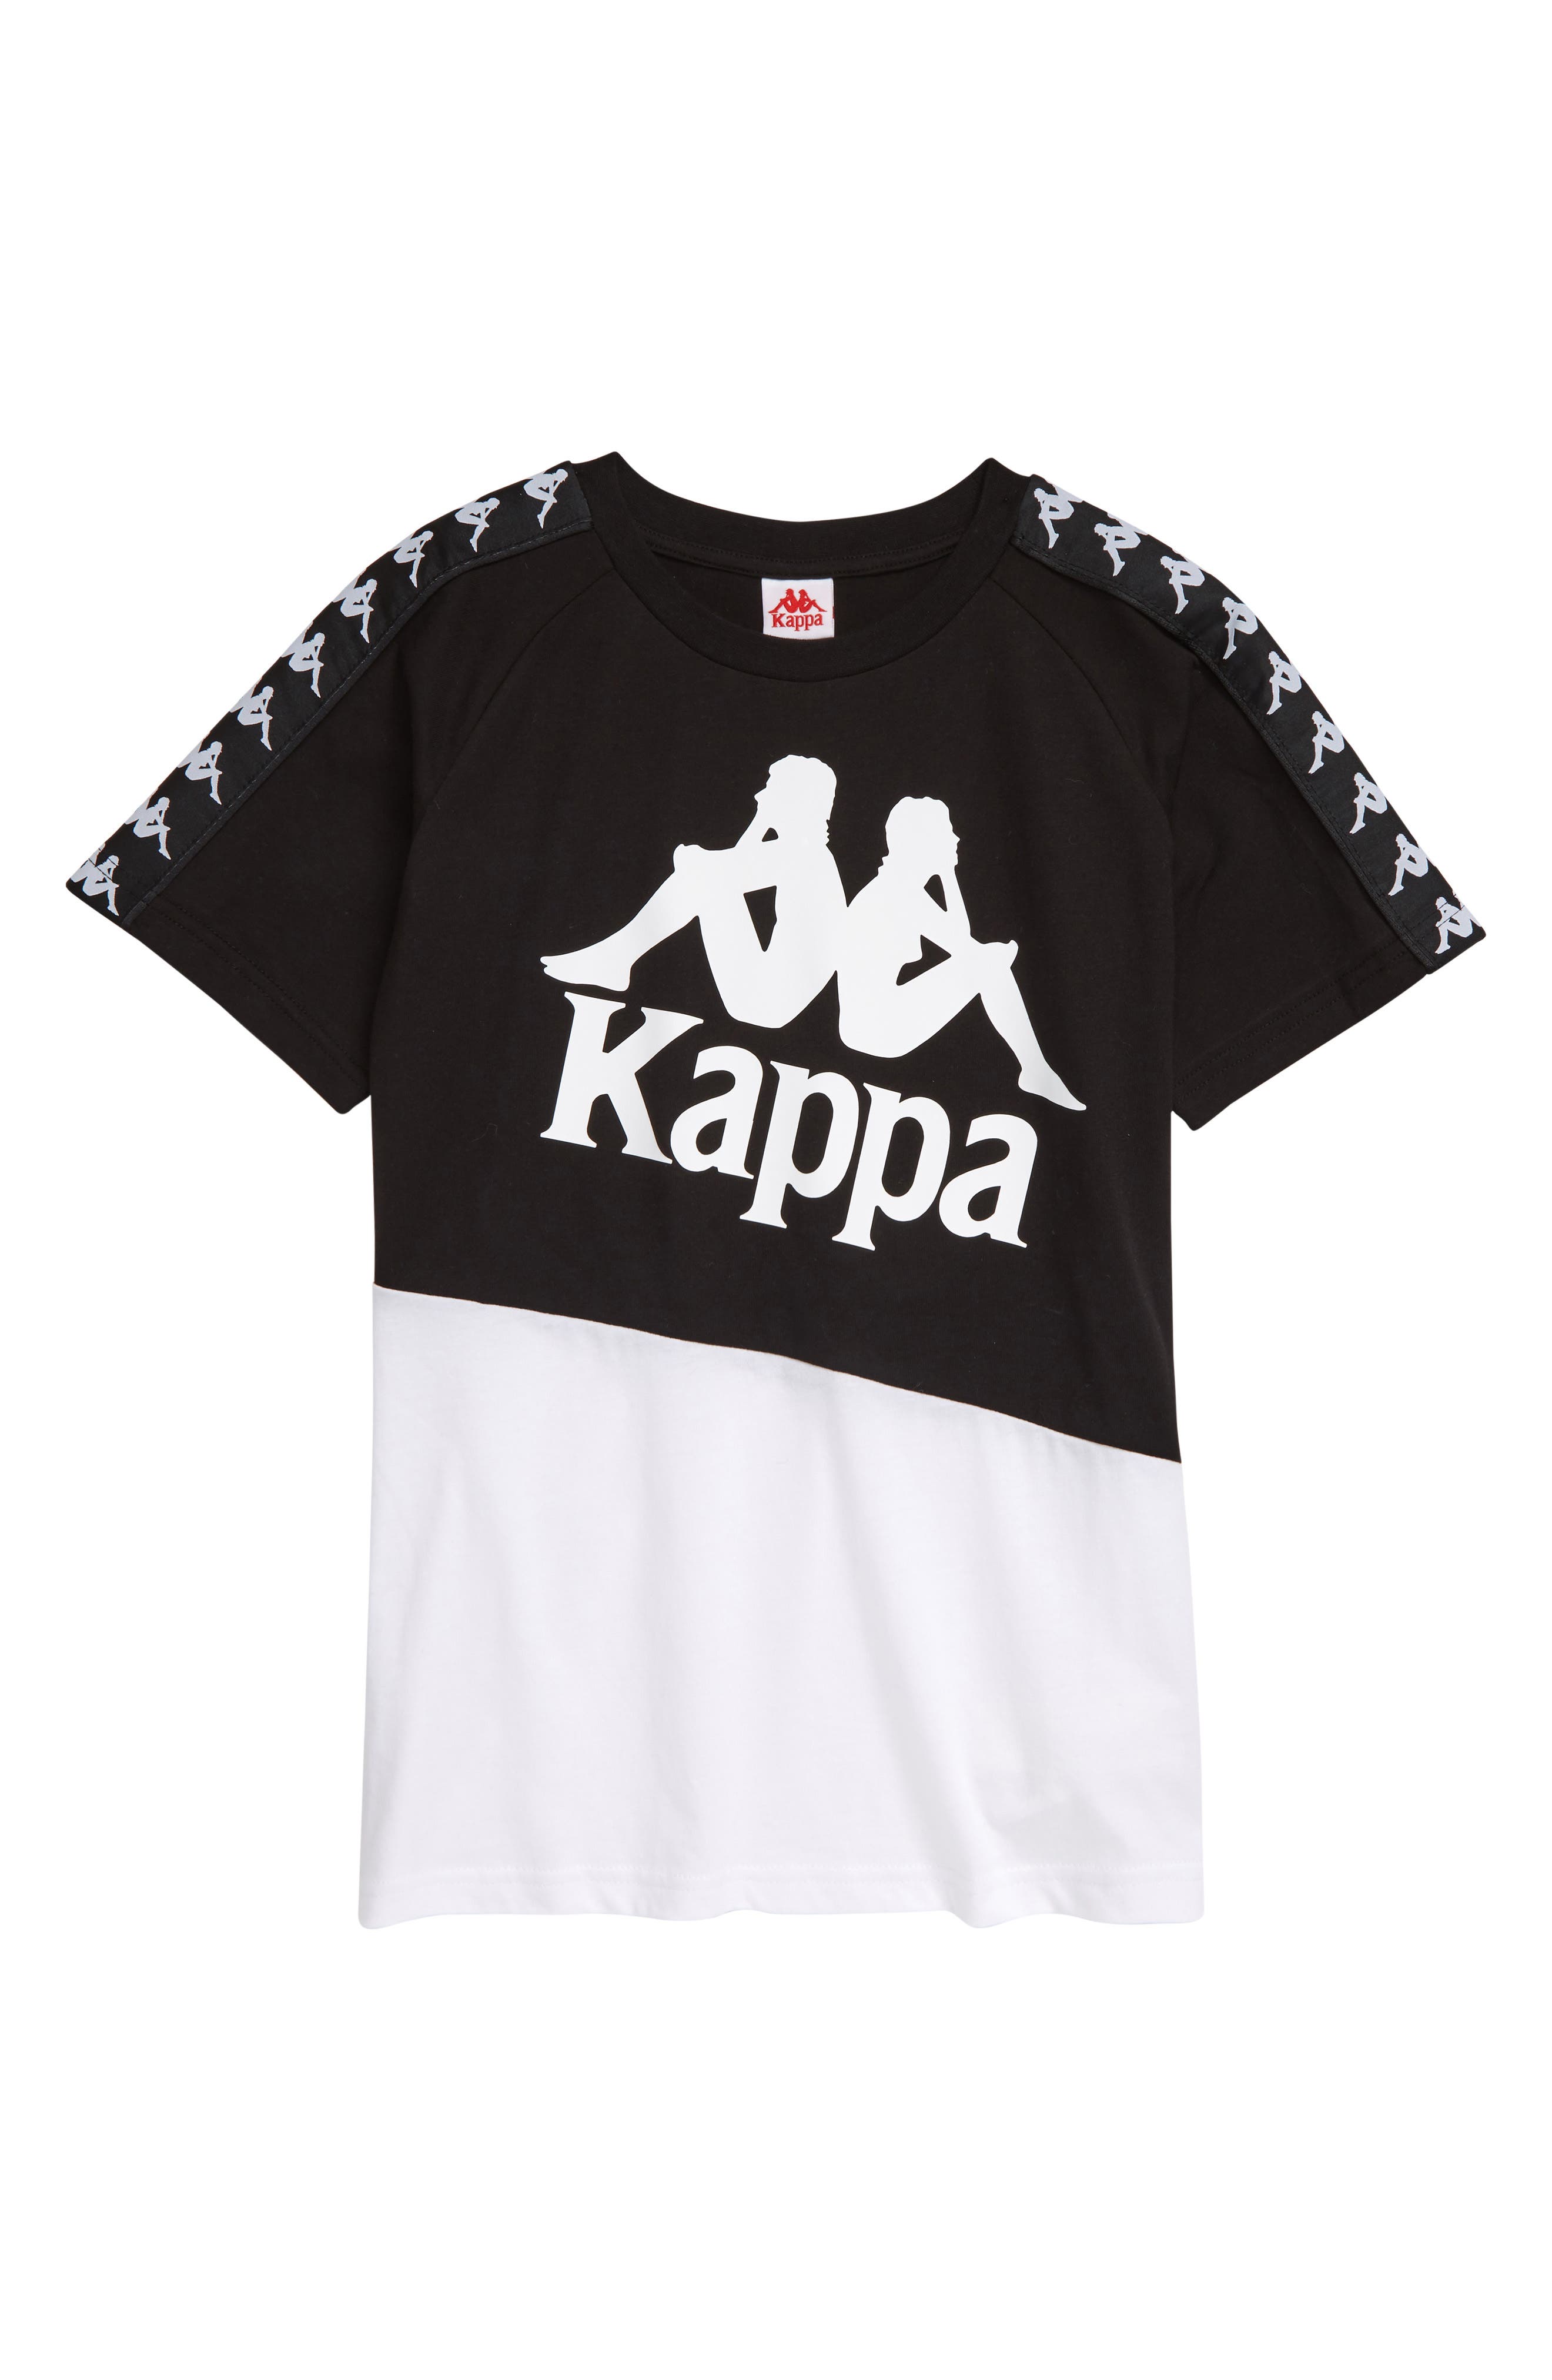 kappa shirt price